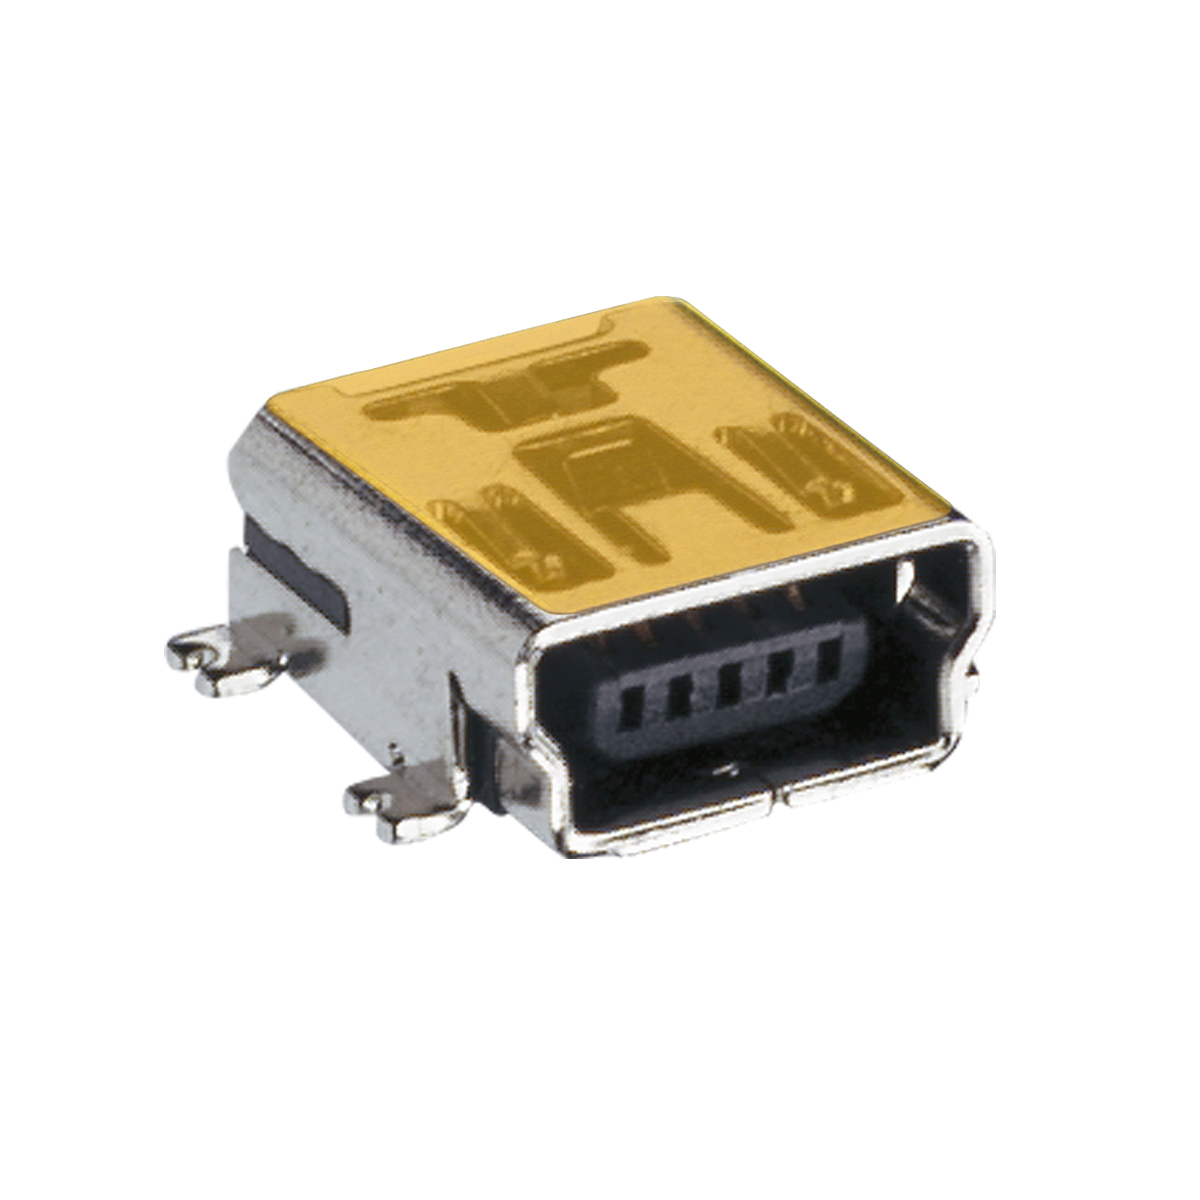 Lumberg: 2486 01 (Series 24 | USB and IEEE 1394 connectors)